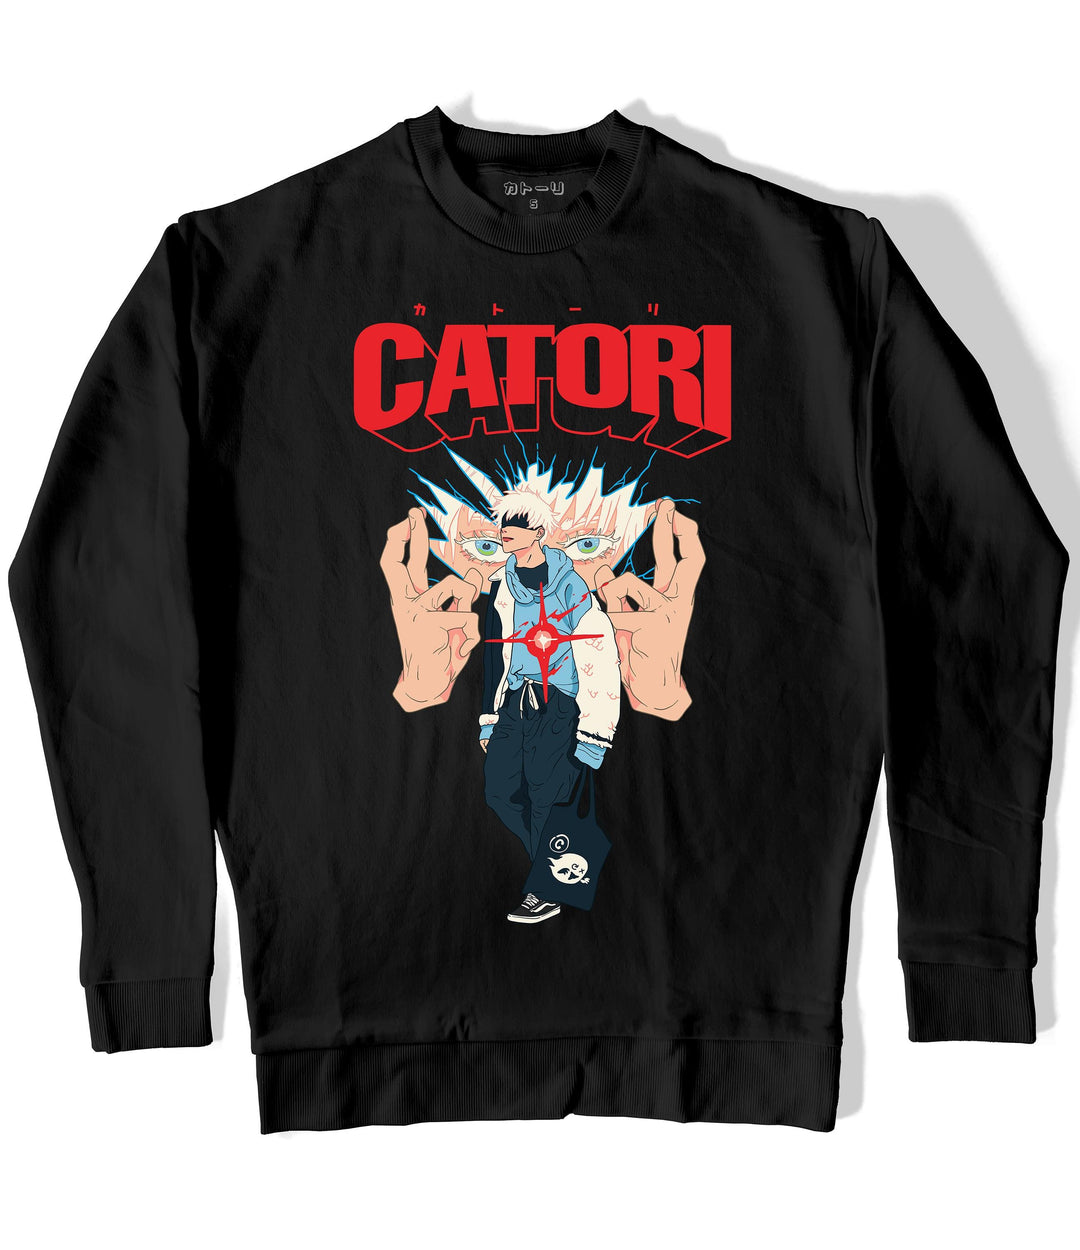 Snap Sweatshirt at Catori Clothing | Graphic & Anime Tees, Hoodies & Sweatshirts 